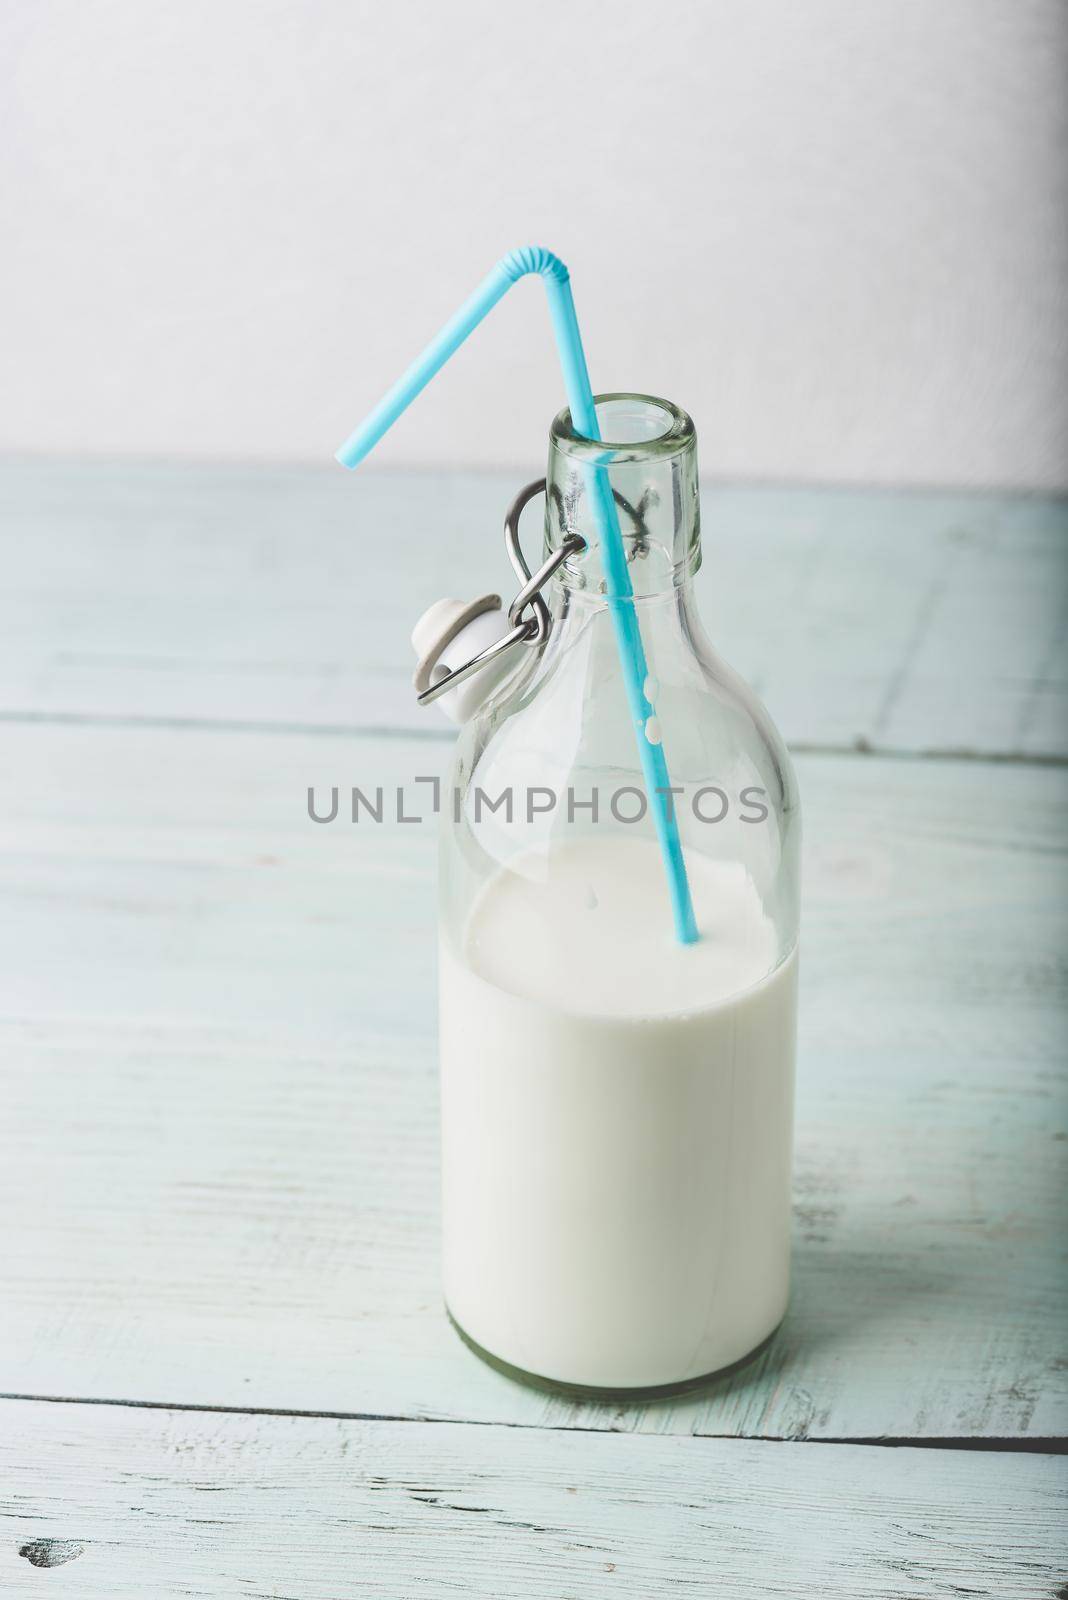 Bottle of milk with blue straw by Seva_blsv